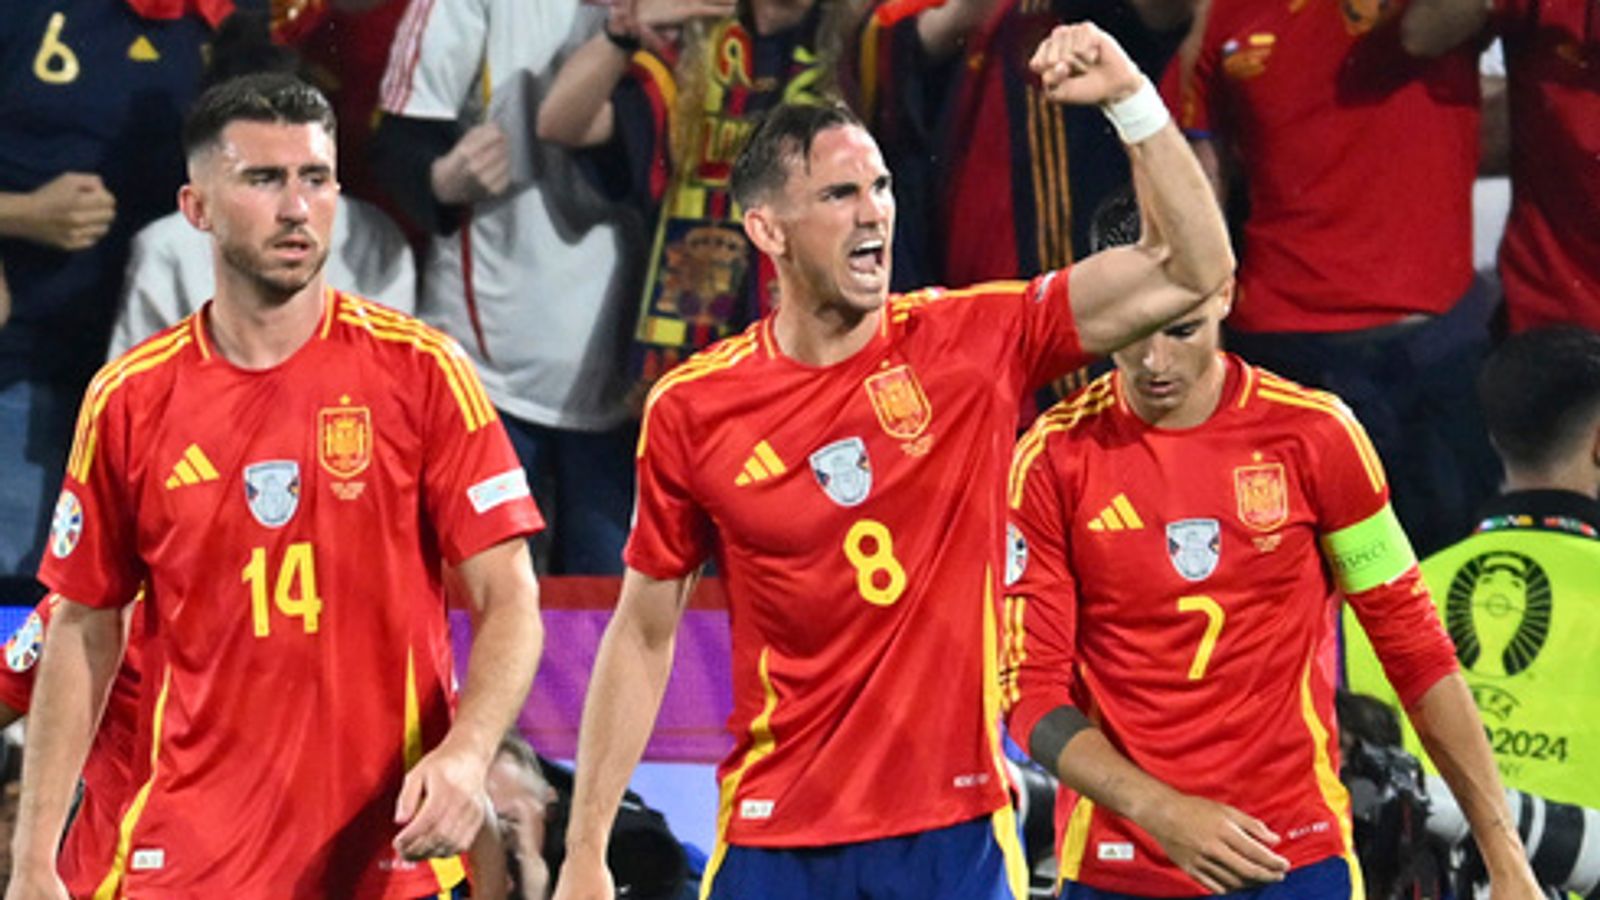 Spain overcome own goal to thrash Georgia and set up Germany clash